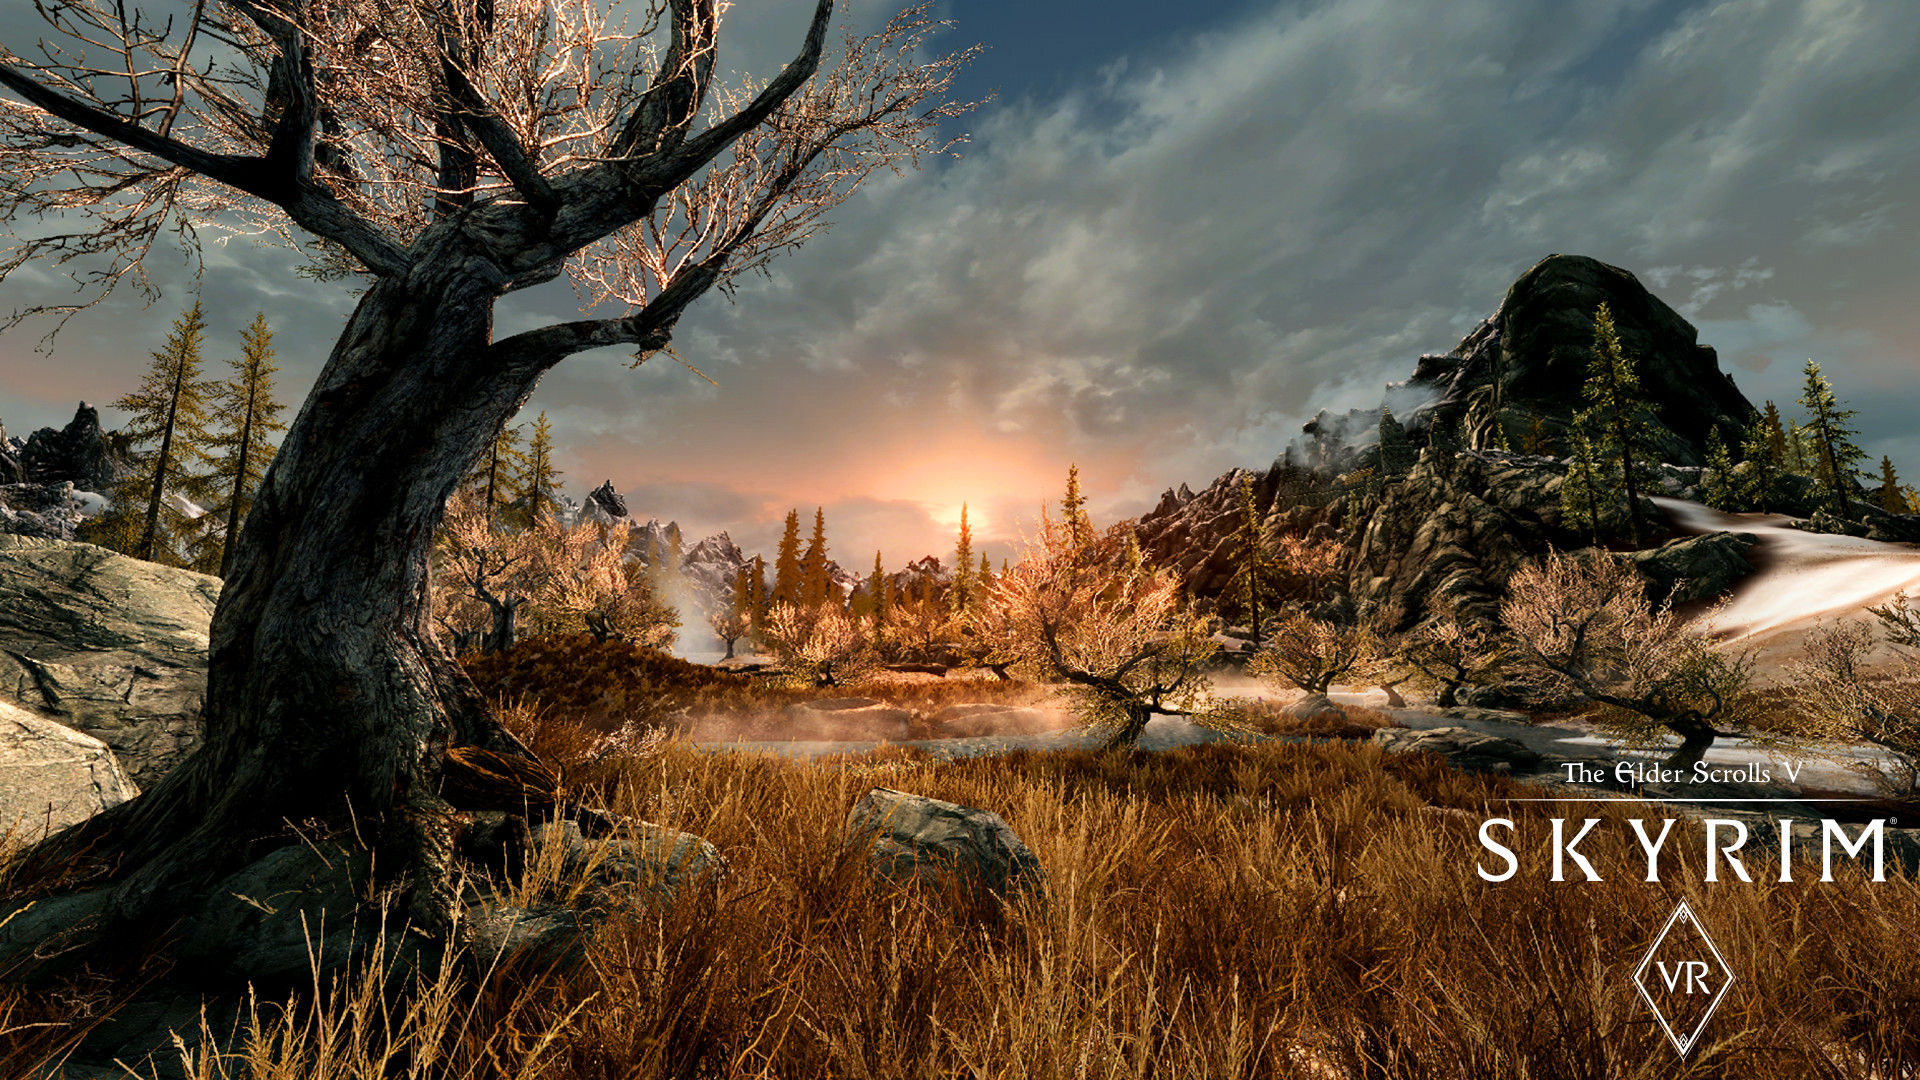 Save 75% on The Elder Scrolls V: Skyrim VR on Steam